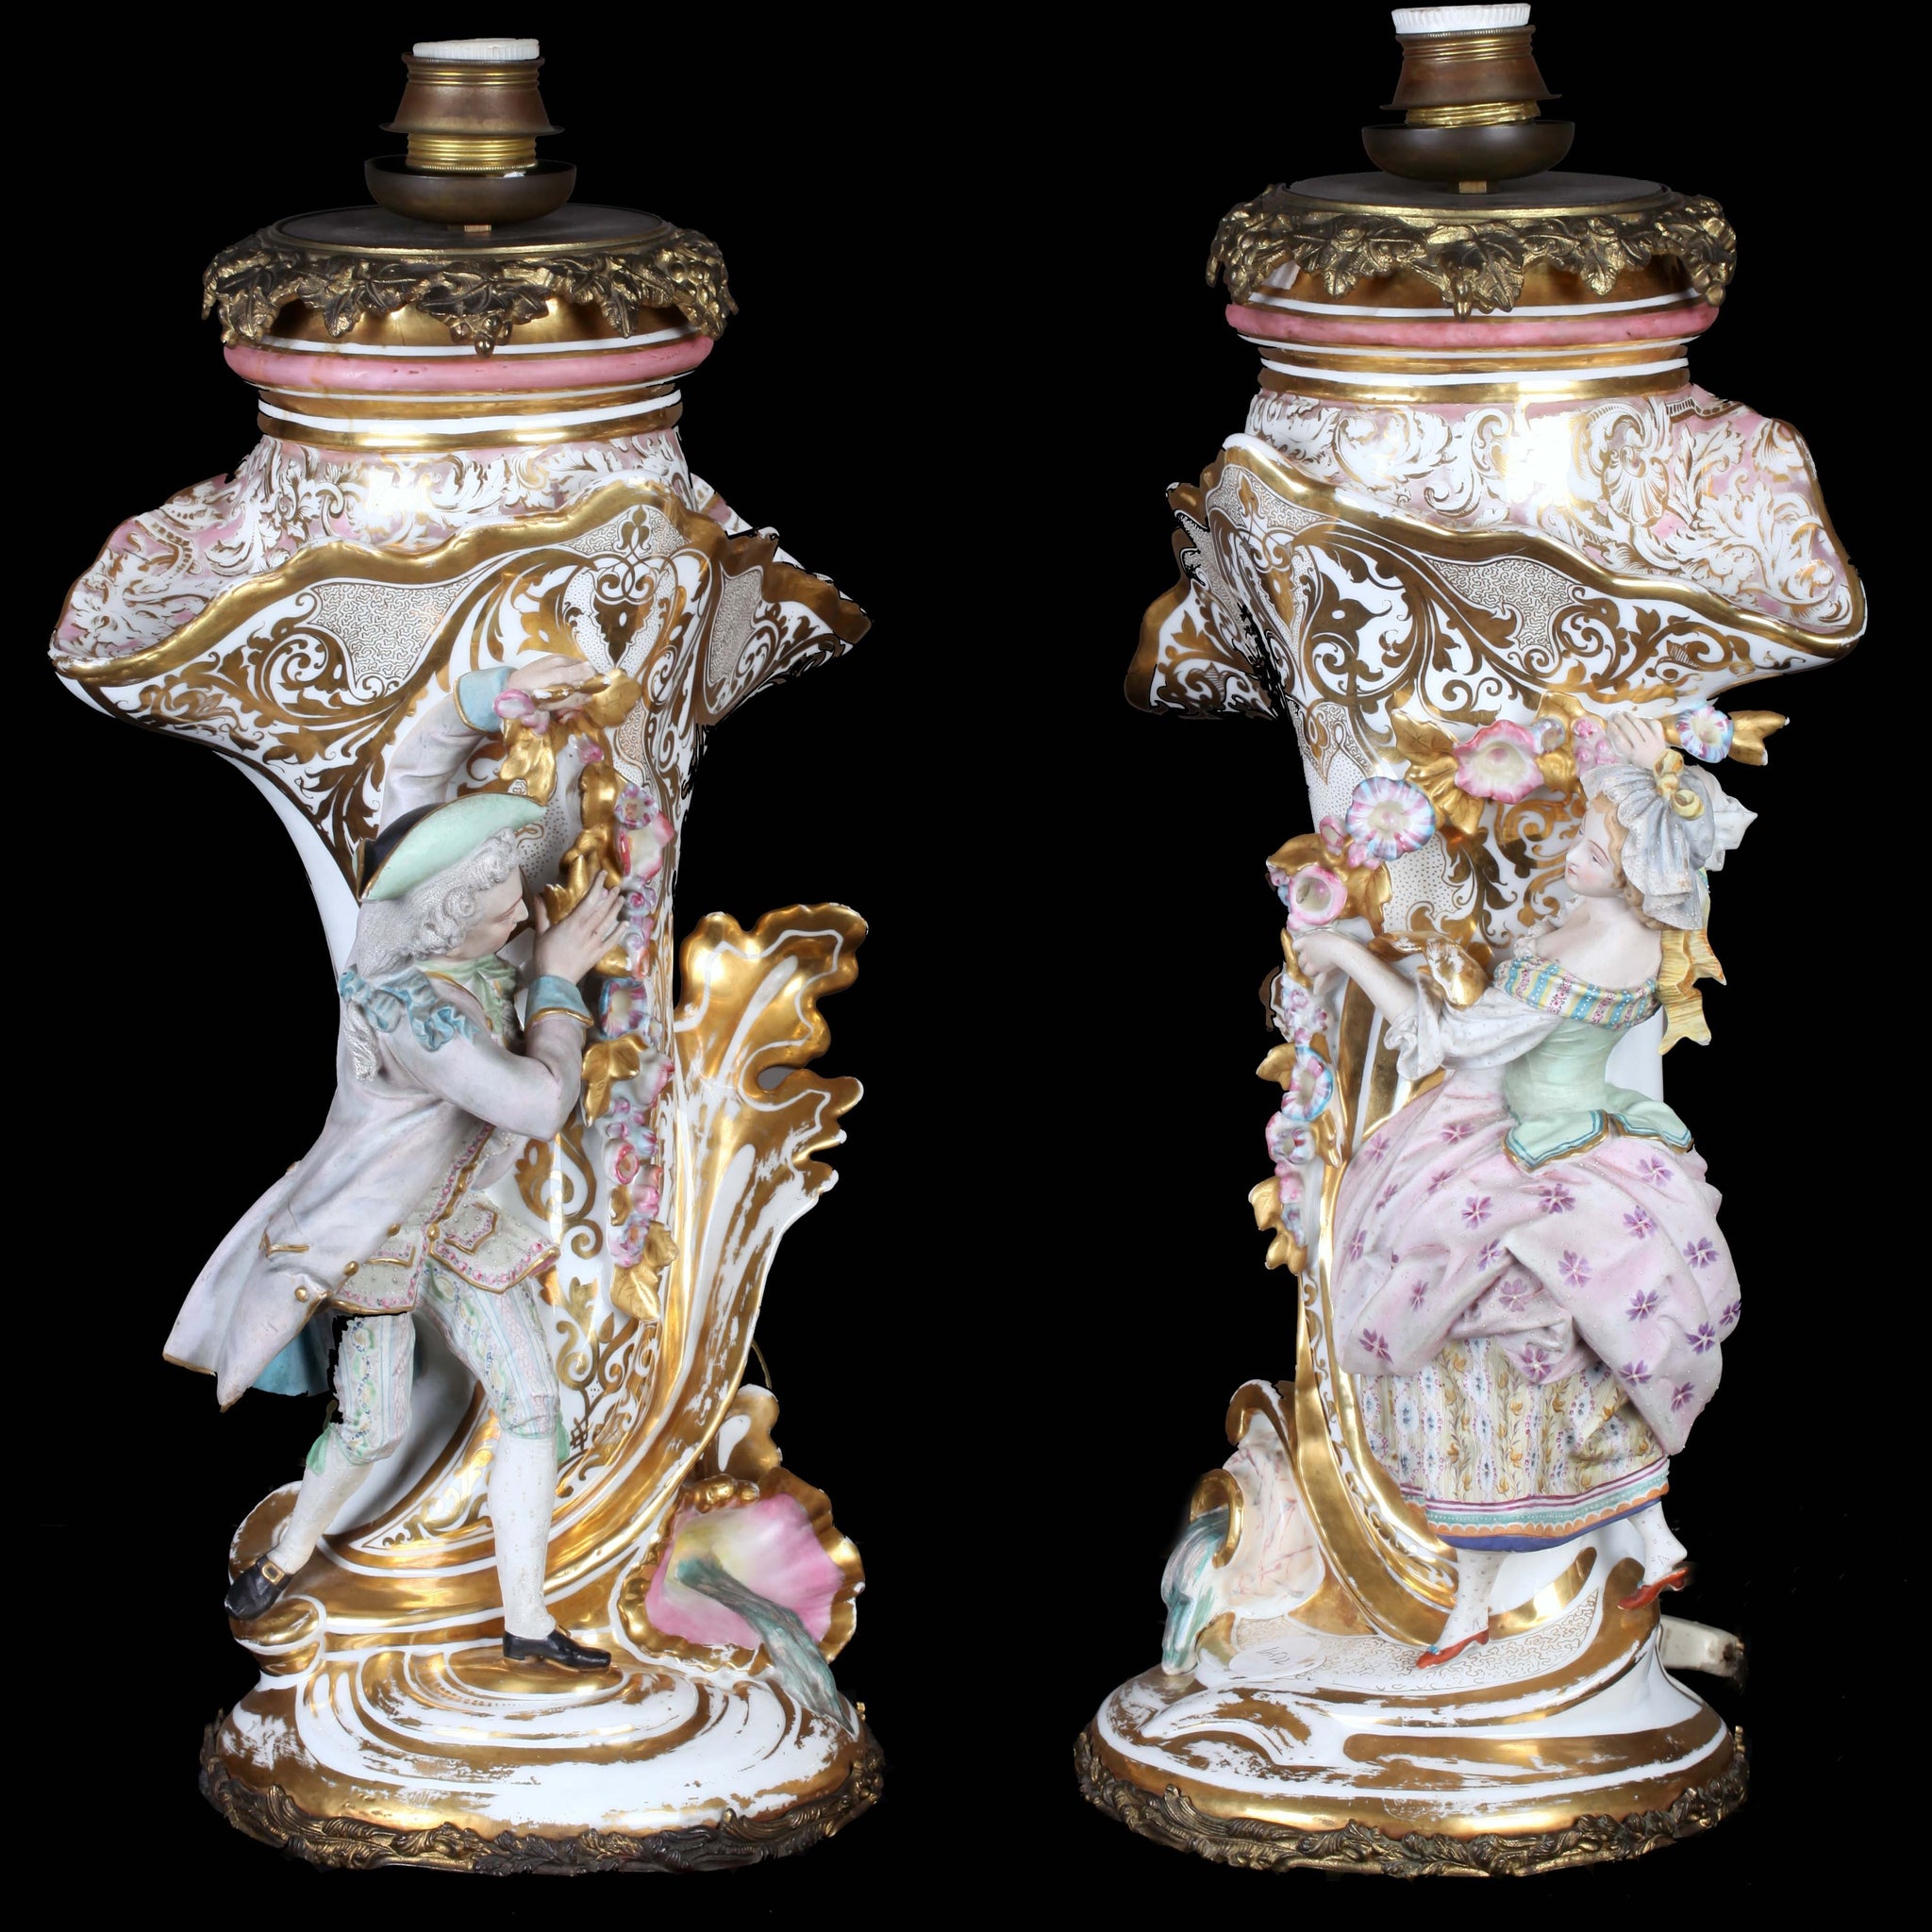 Pair of antique 19th century lamps in Old Paris porcelain